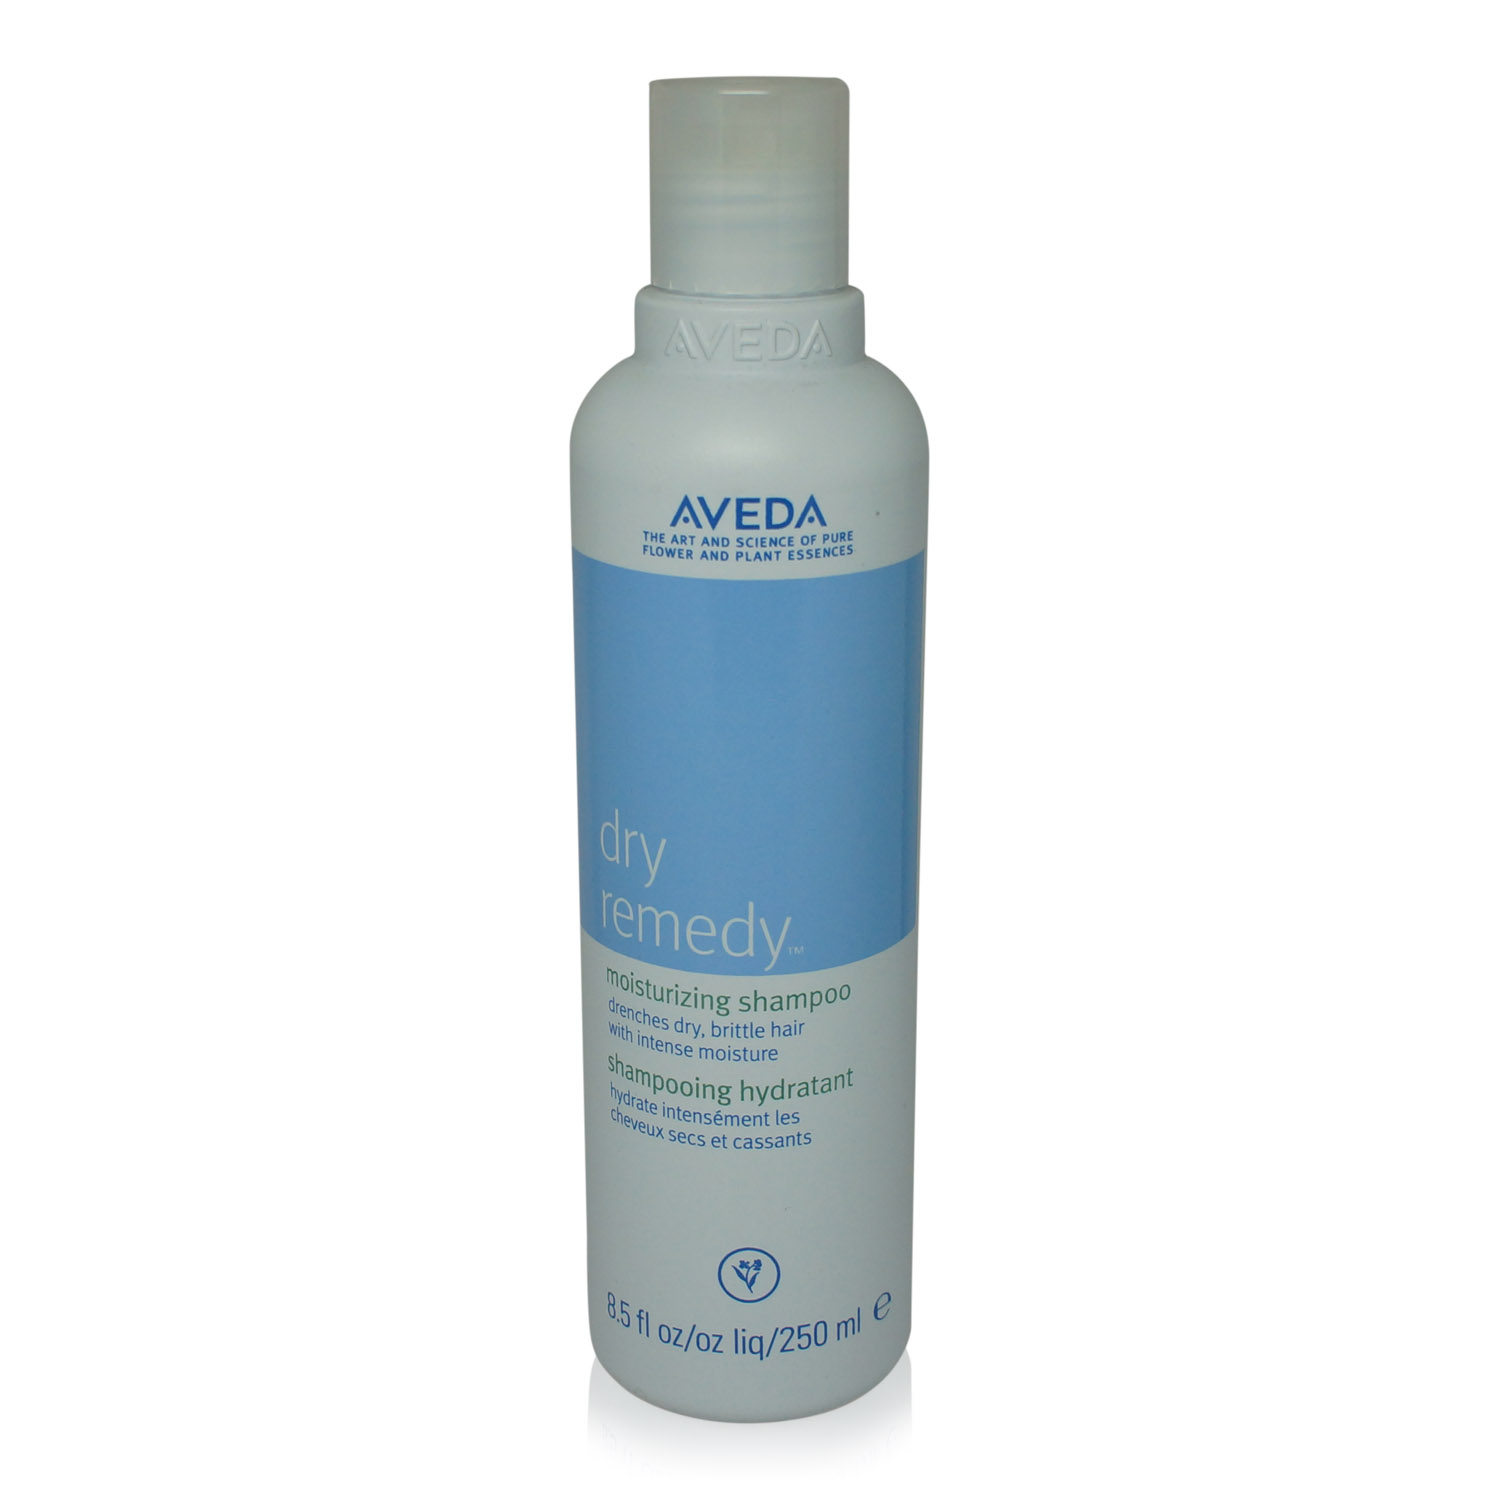 Aveda Dry Remedy Moisturizing Shampoo 8.5 Oz - image 1 of 2